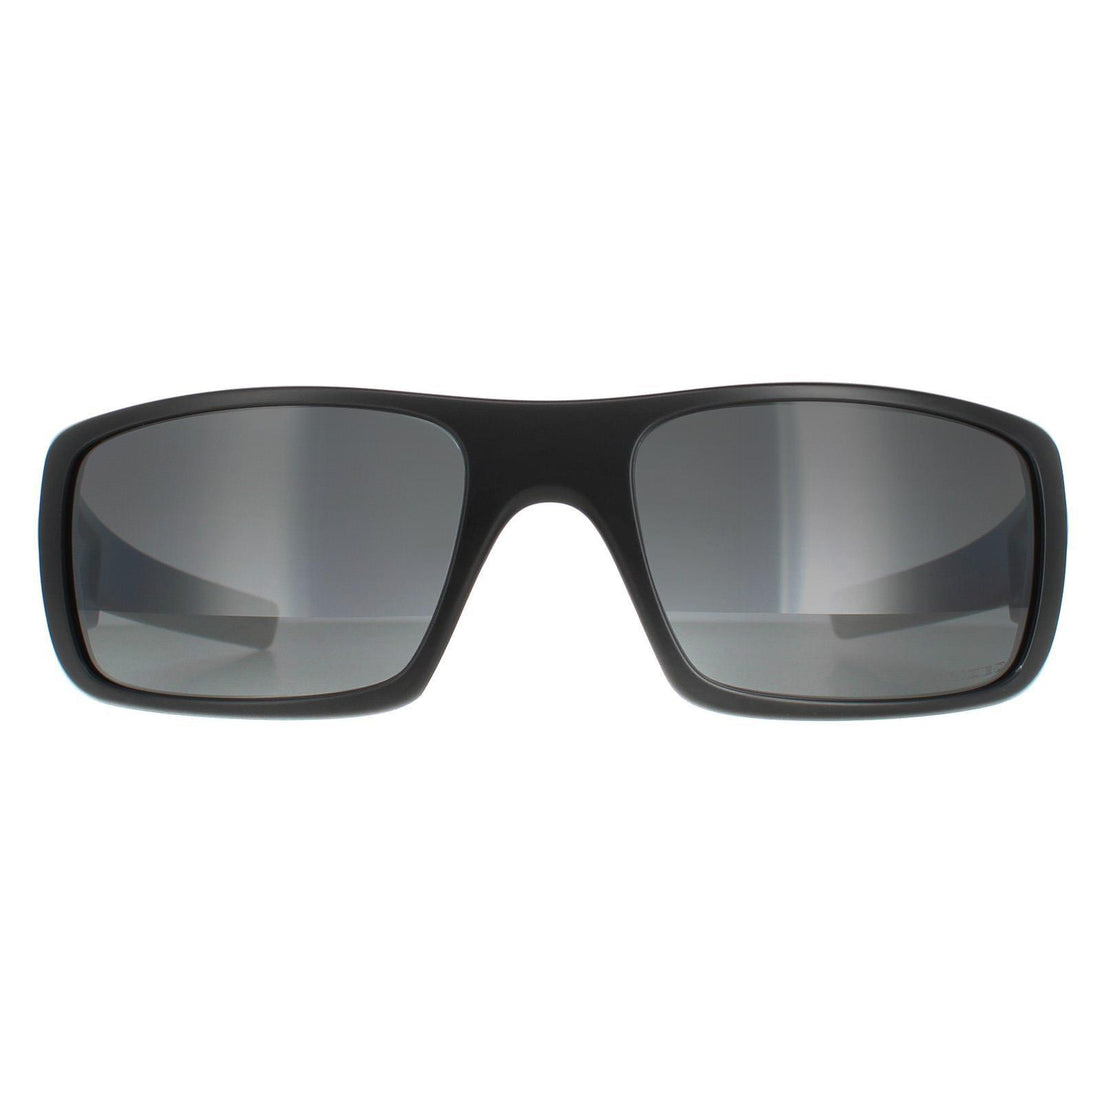 Oakley Crankshaft oo9239 Sunglasses Matt Black Black Iridium Polarized